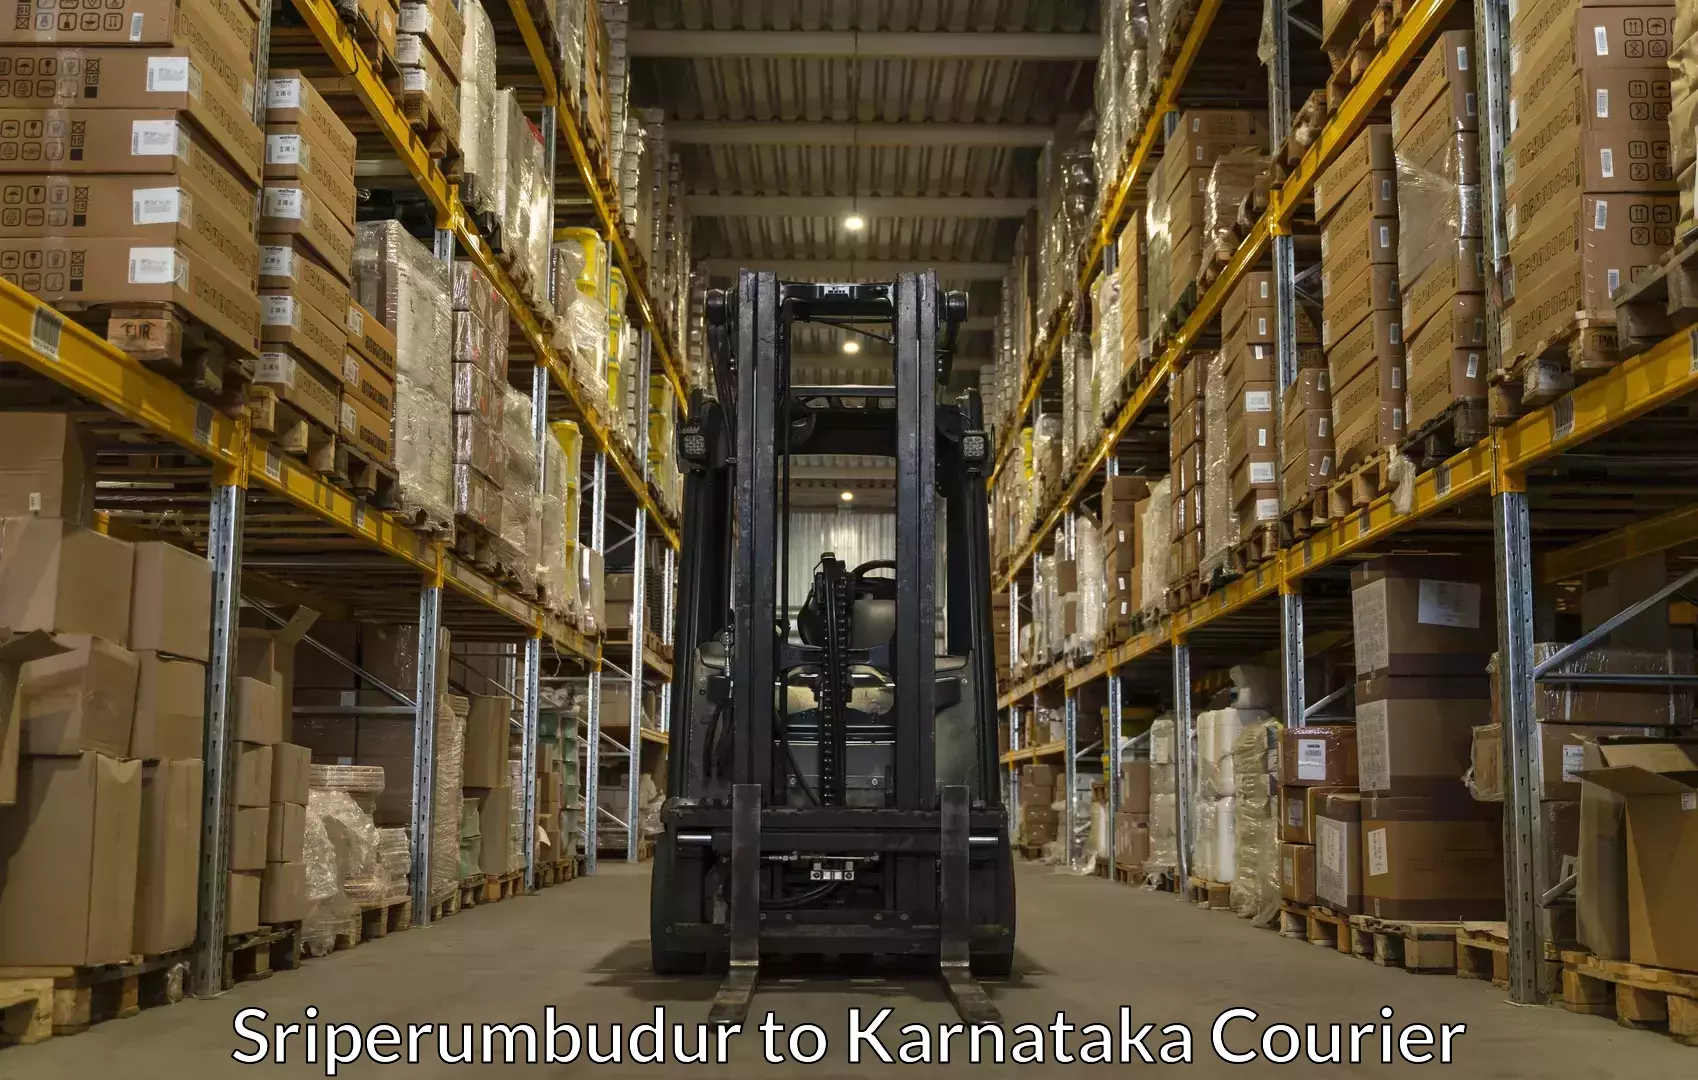 Baggage transport network Sriperumbudur to Sira